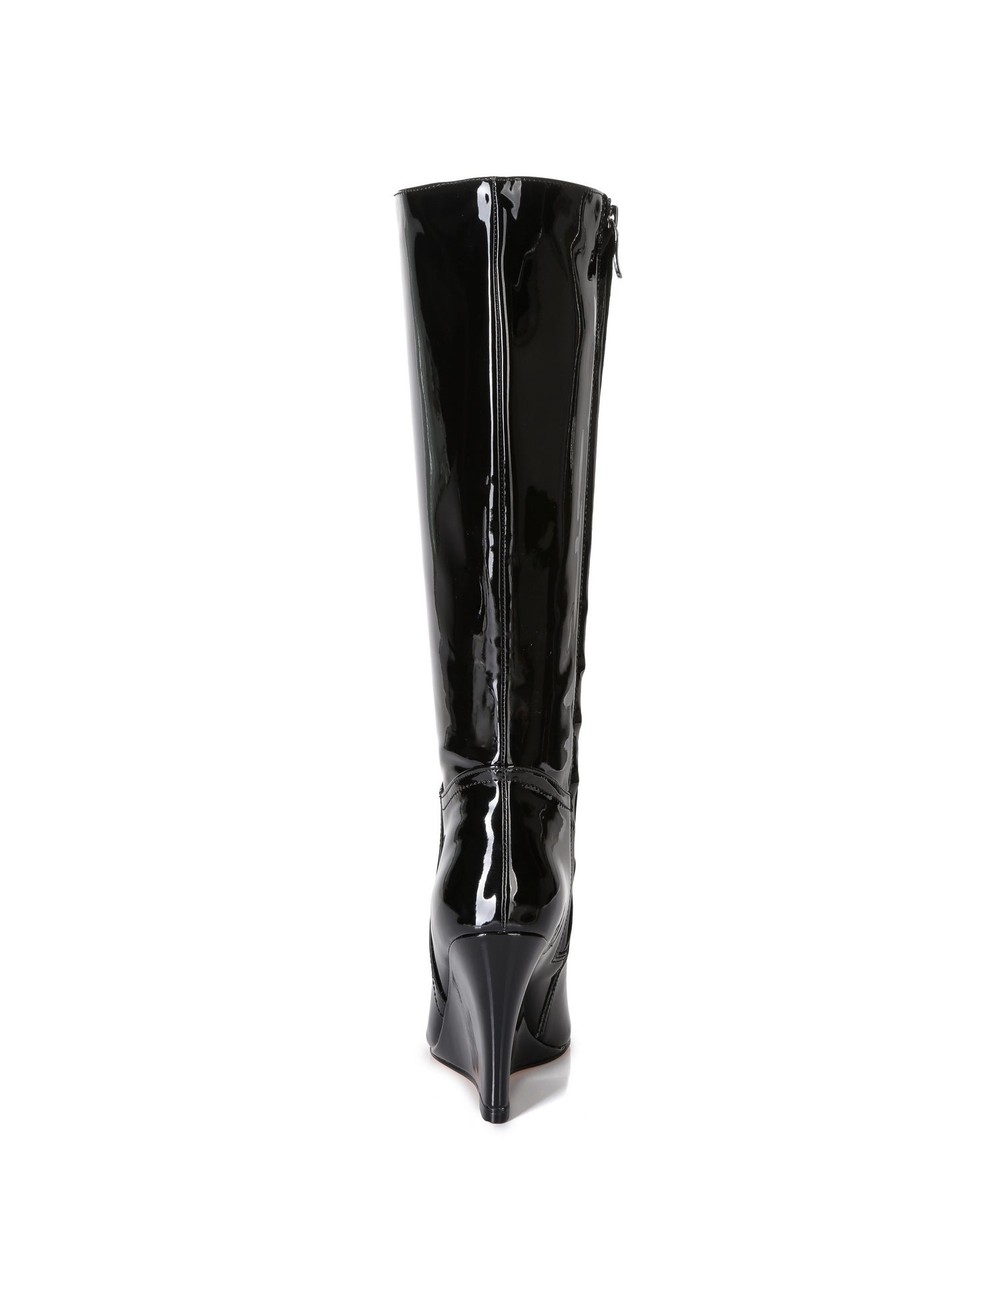 Giaro Giaro knee boots with wedge heel ELLA in black shiny